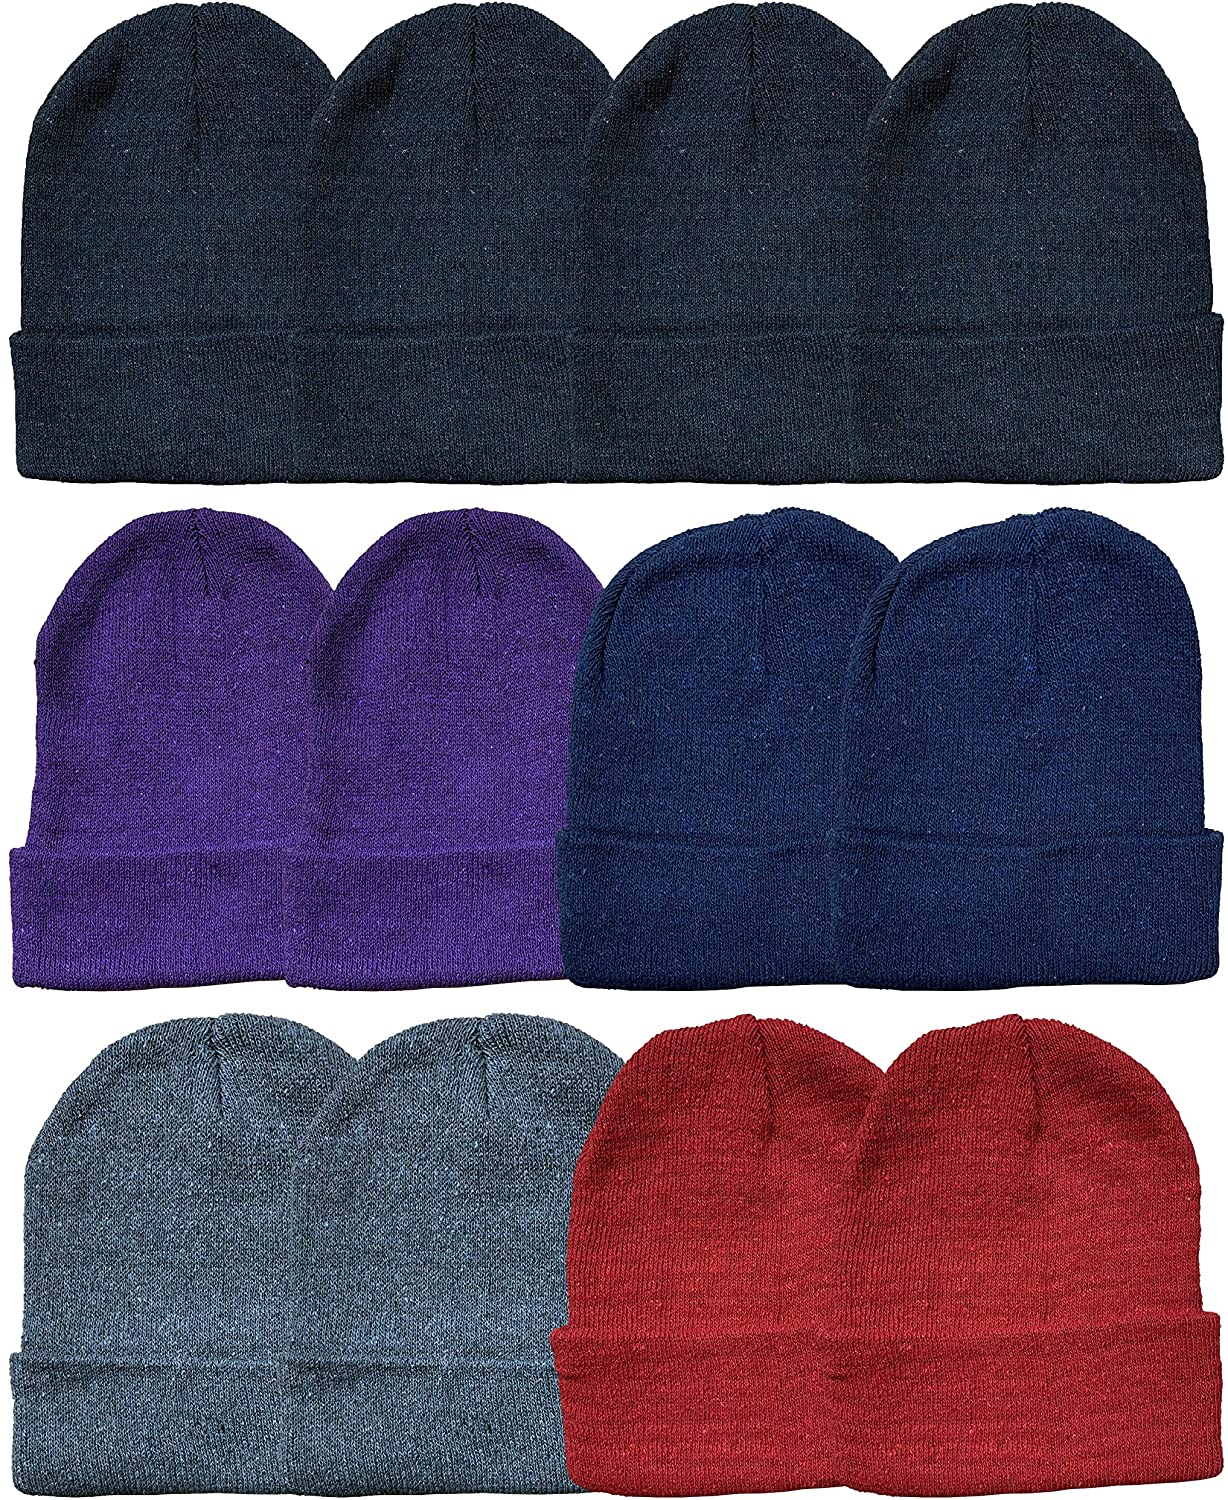 Yacht & Smith Winter Beanies & Gloves for Men & Women Warm Thermal Cold Resistant Bulk Packs 